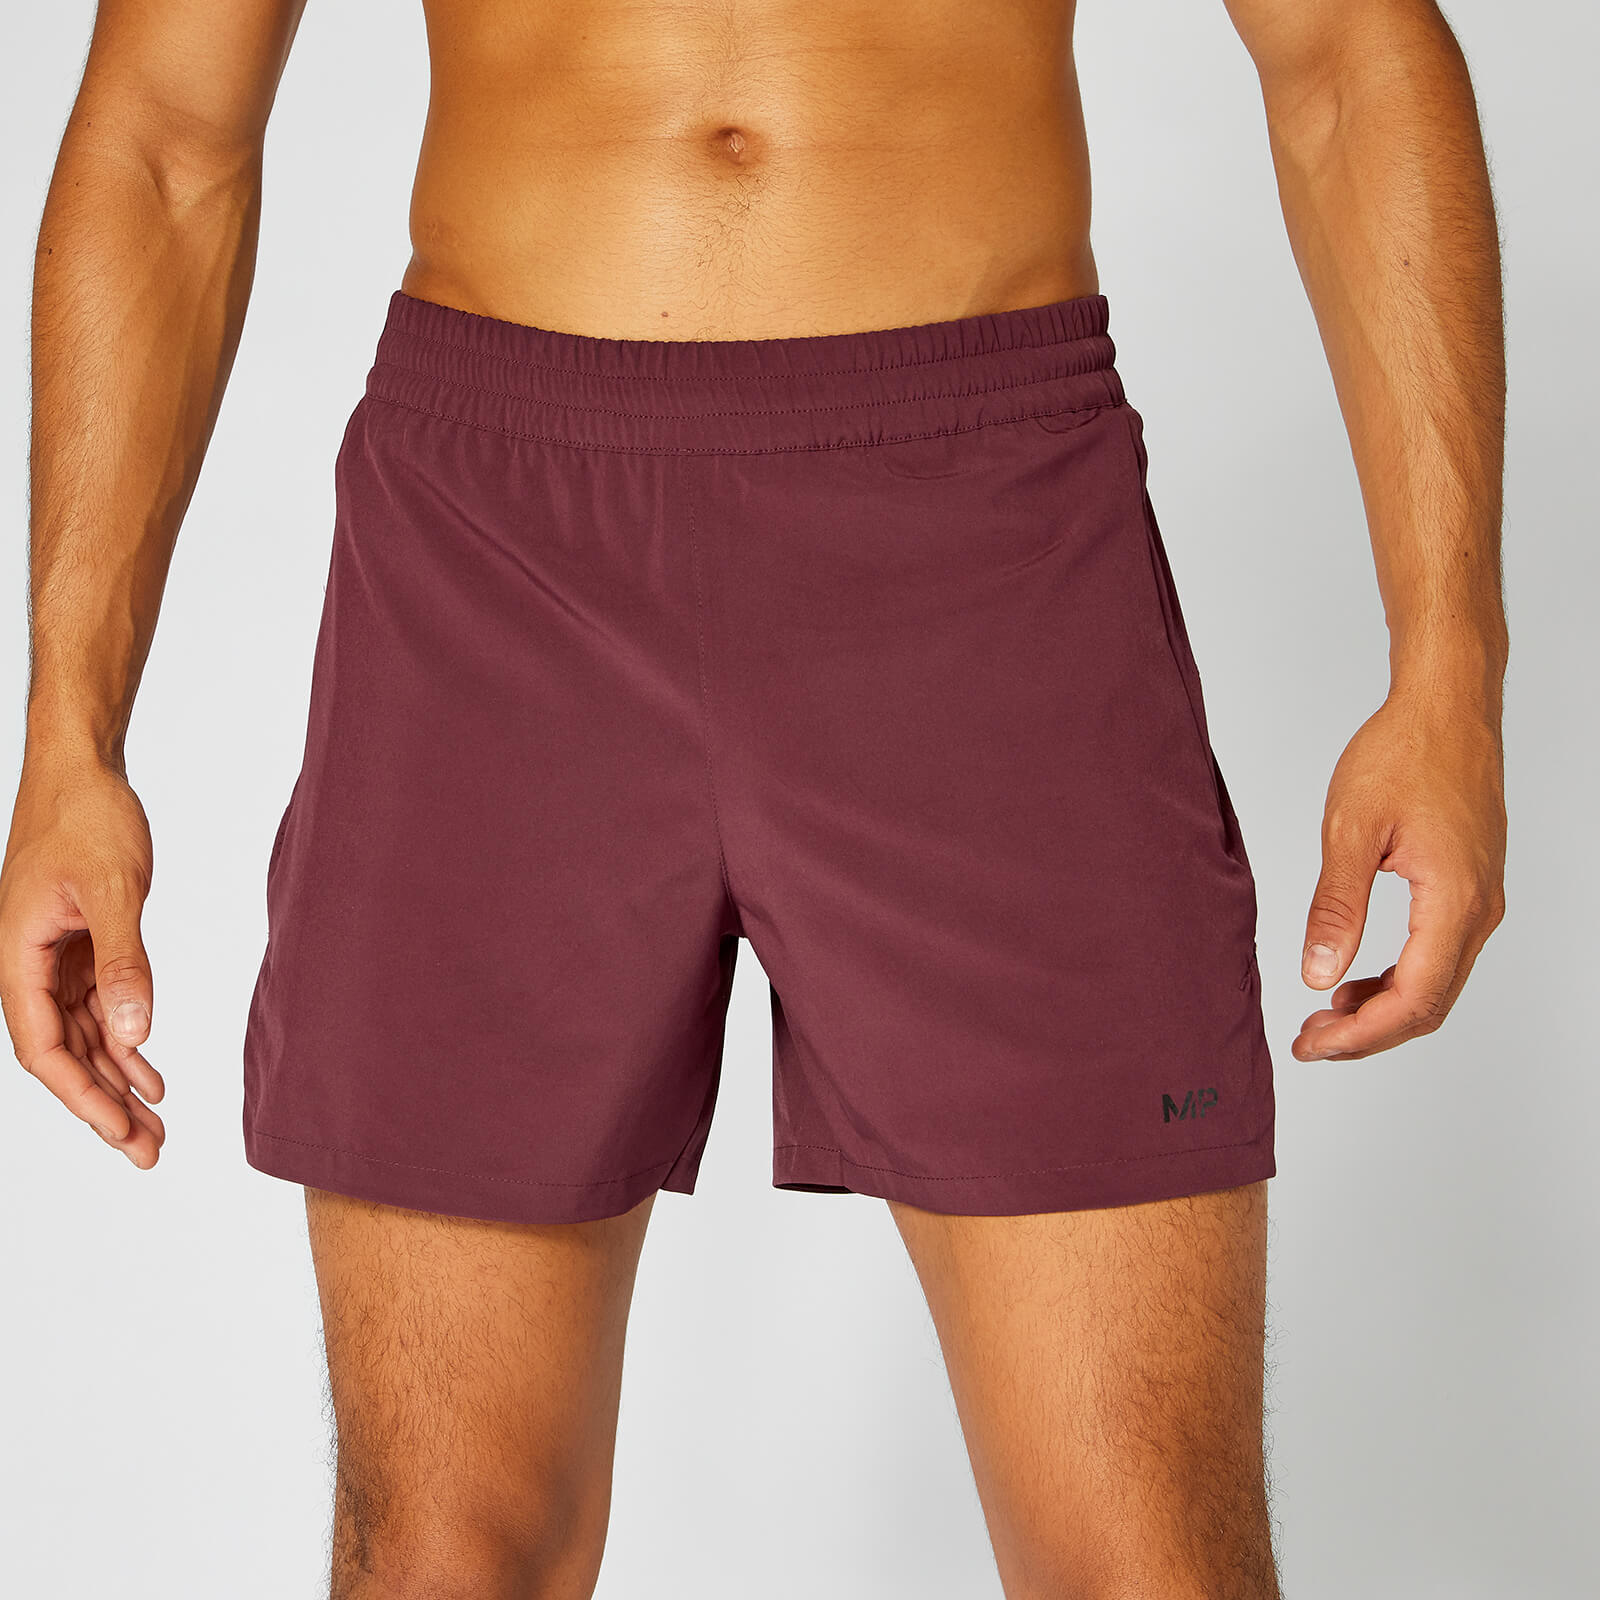 MP Men's Sprint 5 Inch Shorts - Oxblood - S